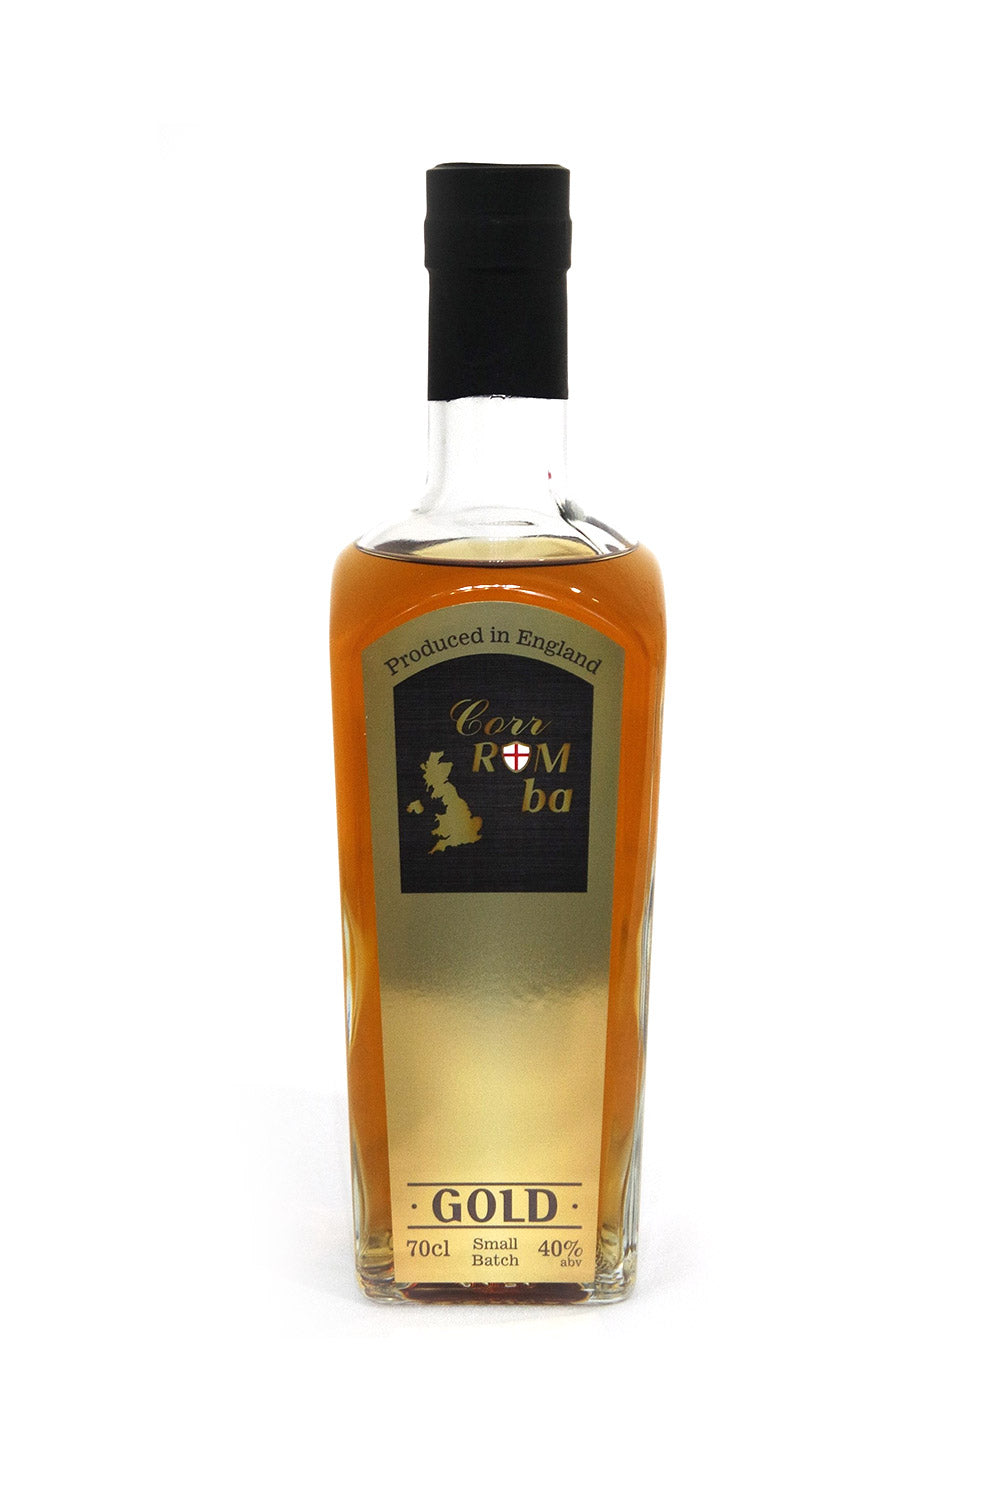 Corr-Rum-ba Gold